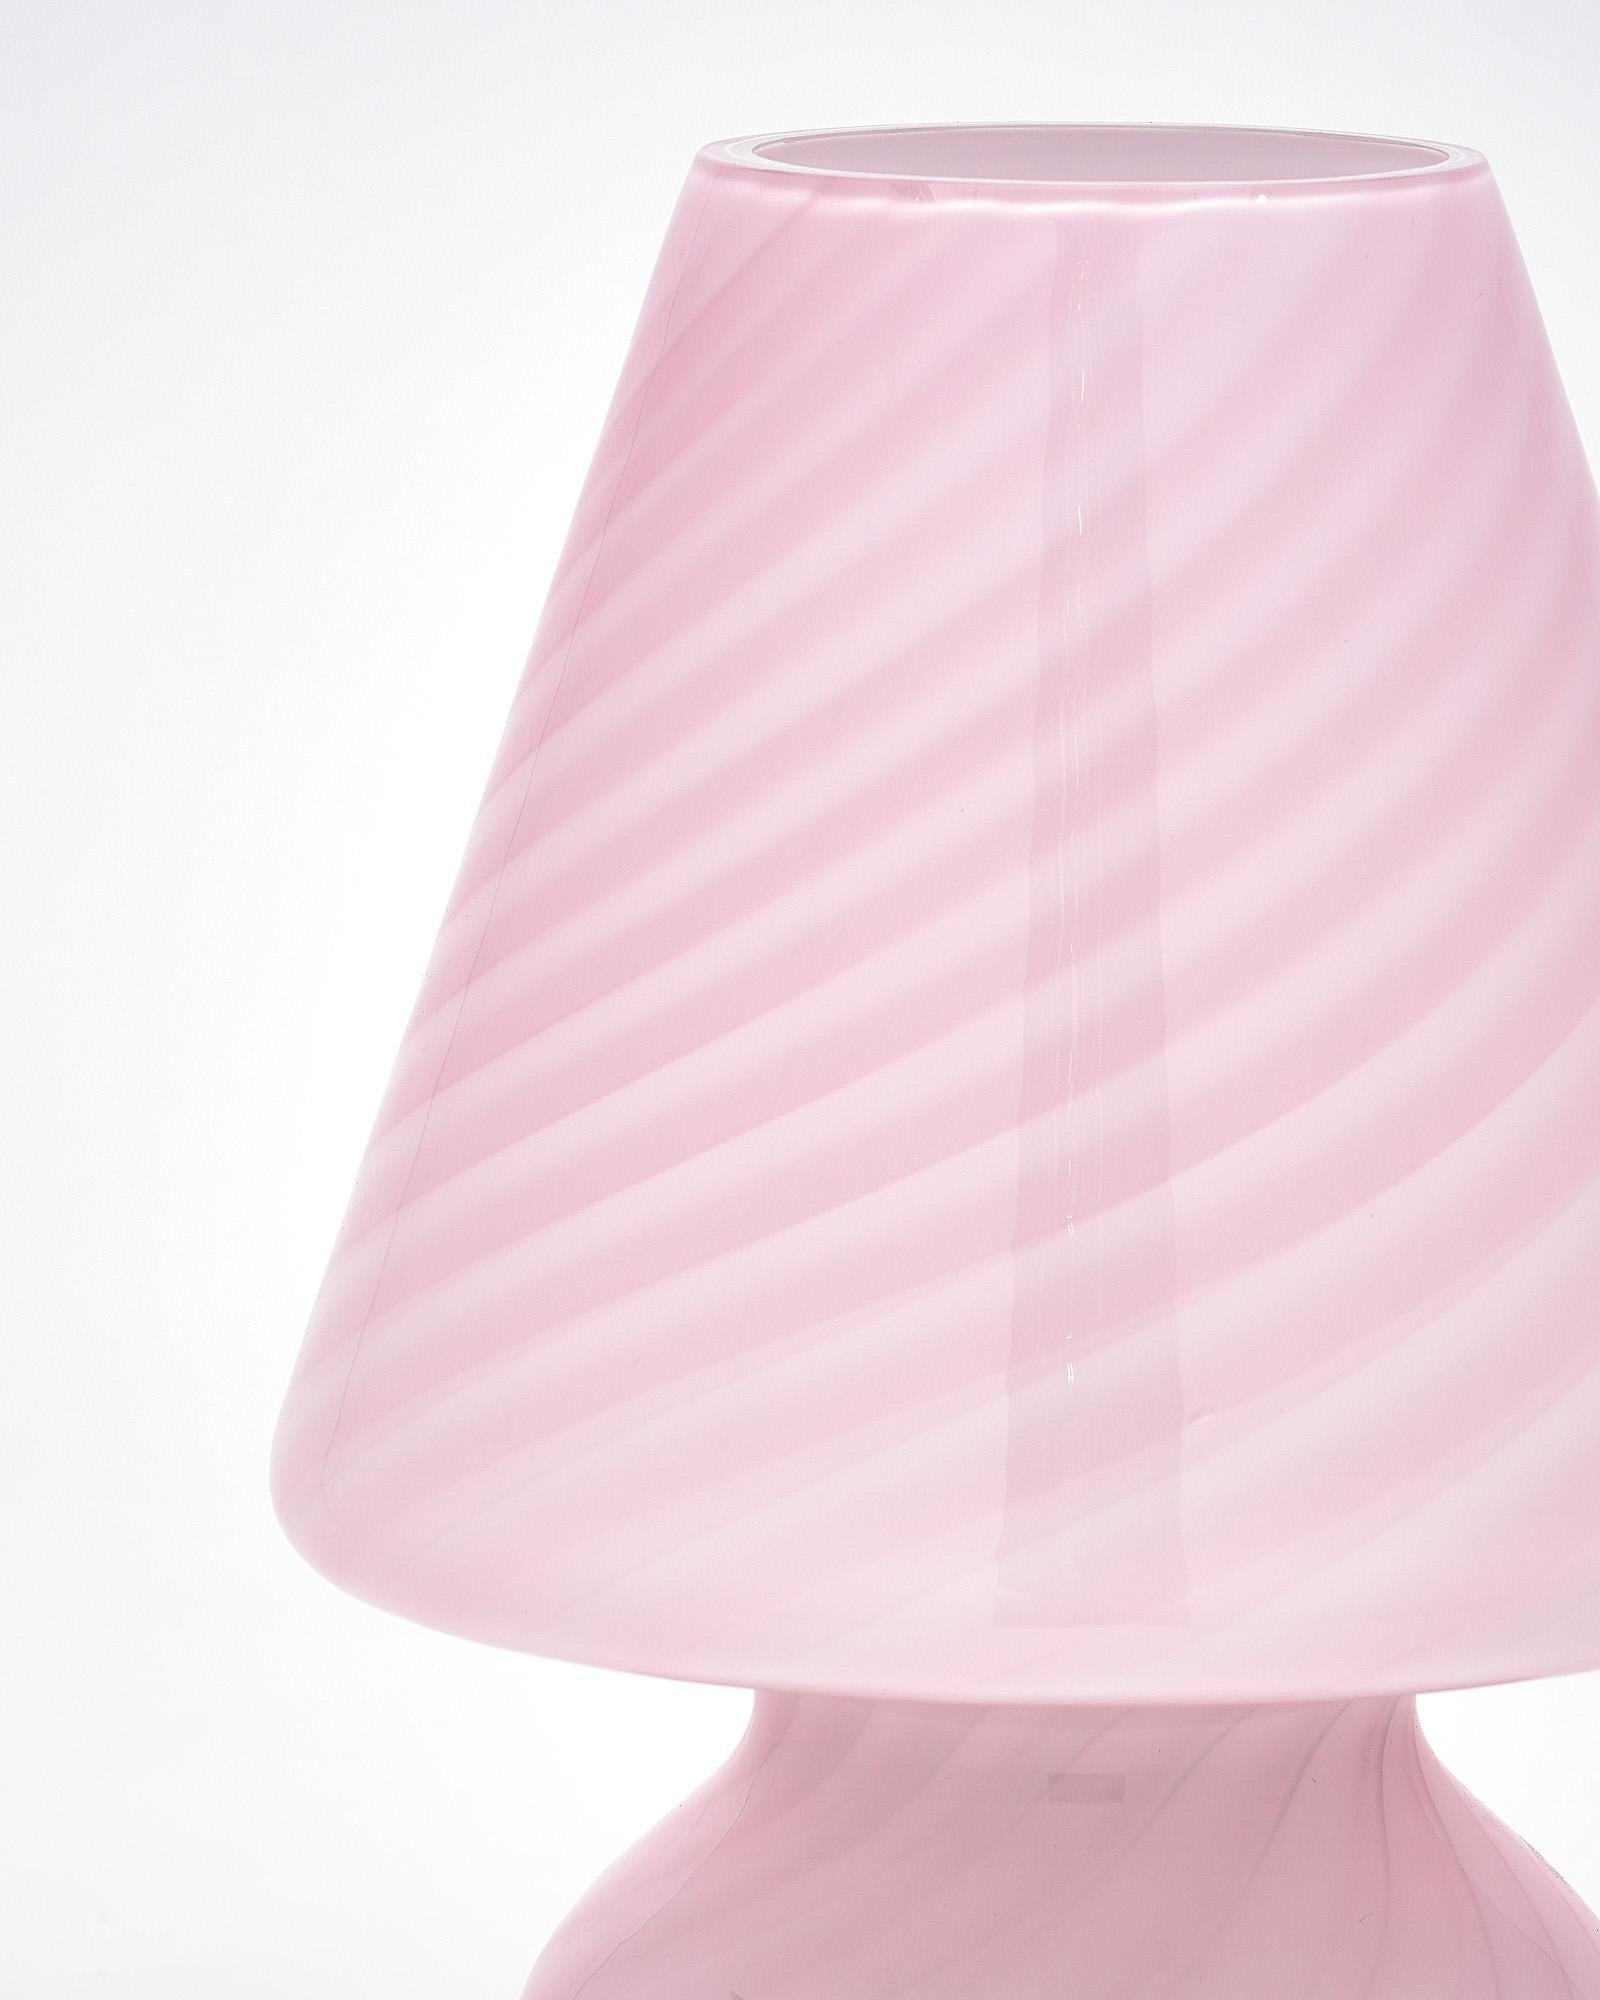 Modern Pink Murano Glass “Fungo” Lamp For Sale